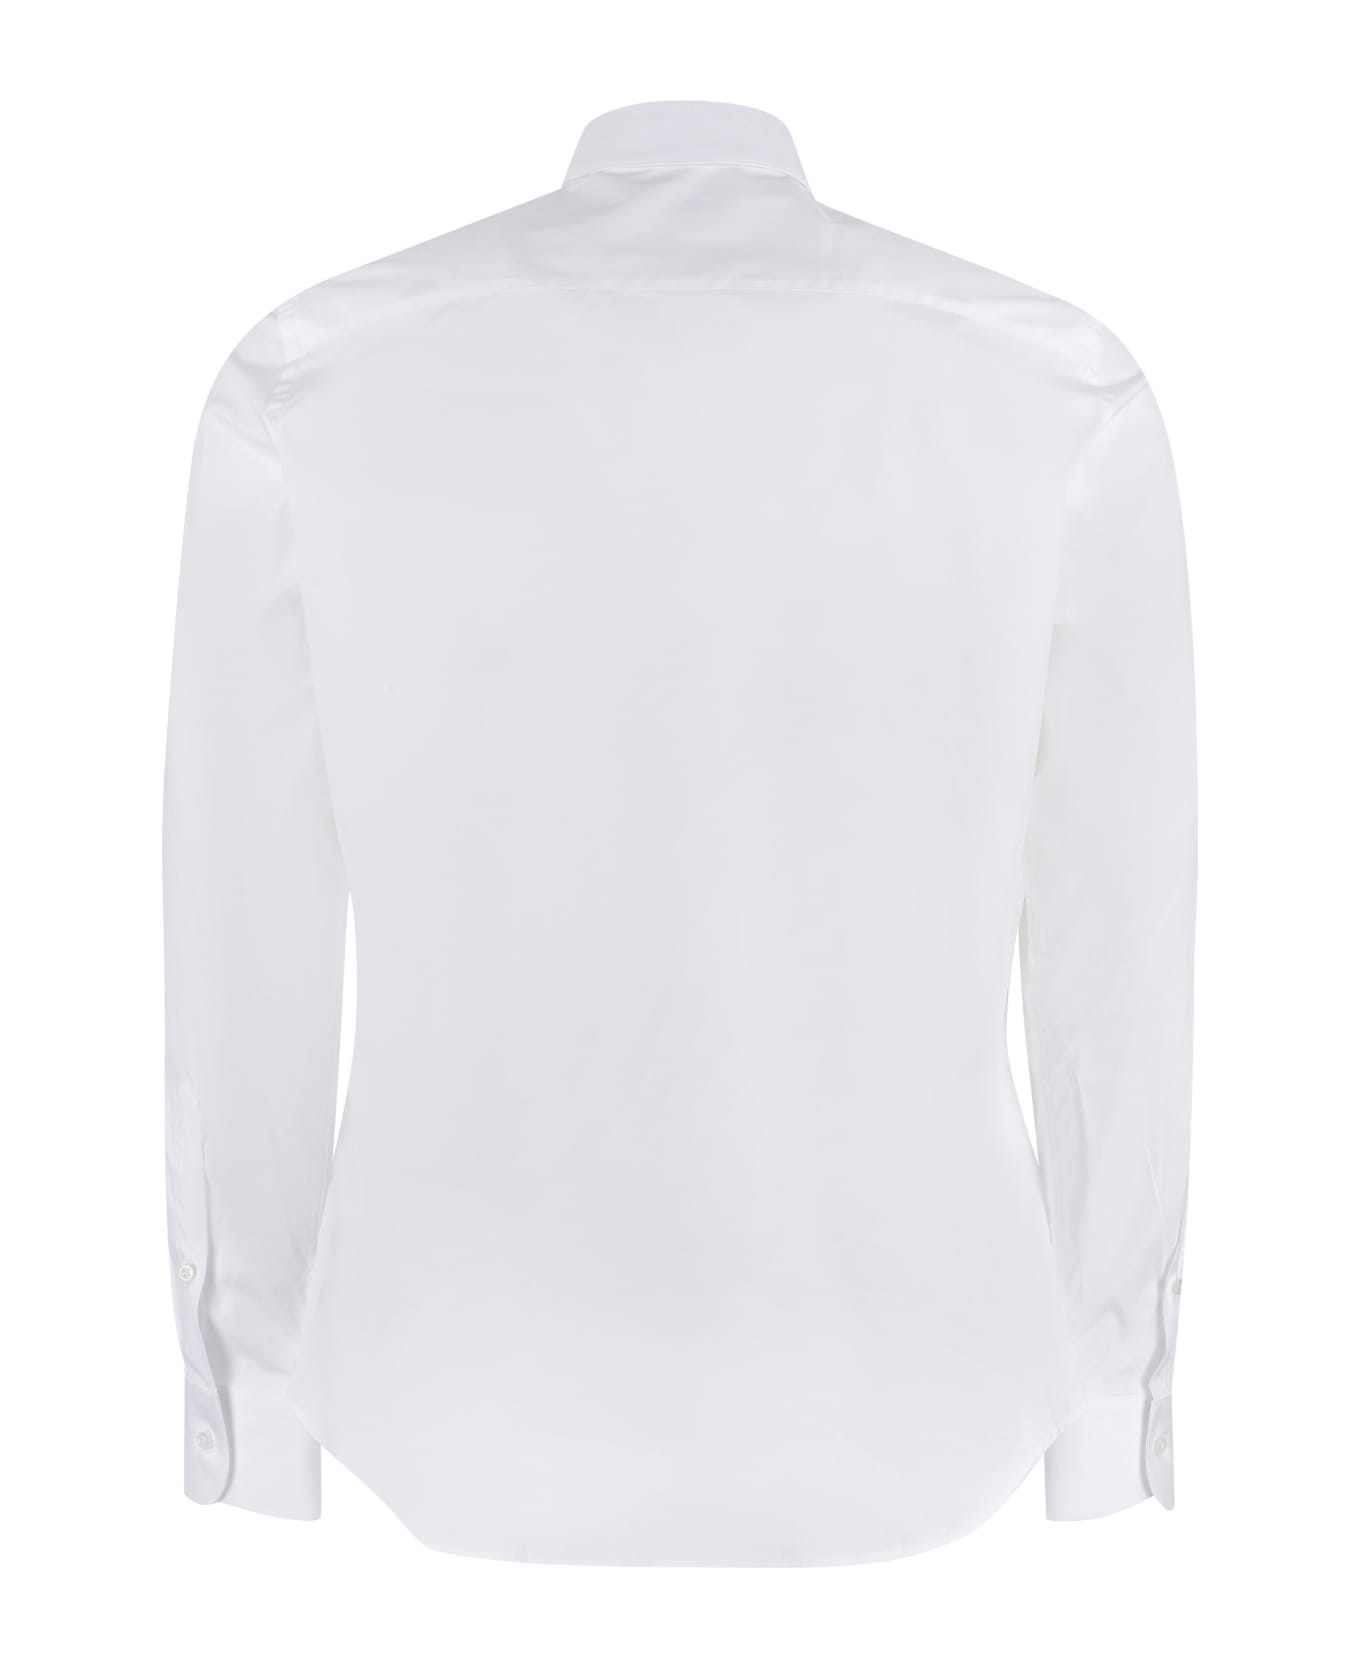 Sonrisa Long Sleeve Stretch Cotton Shirt - White シャツ